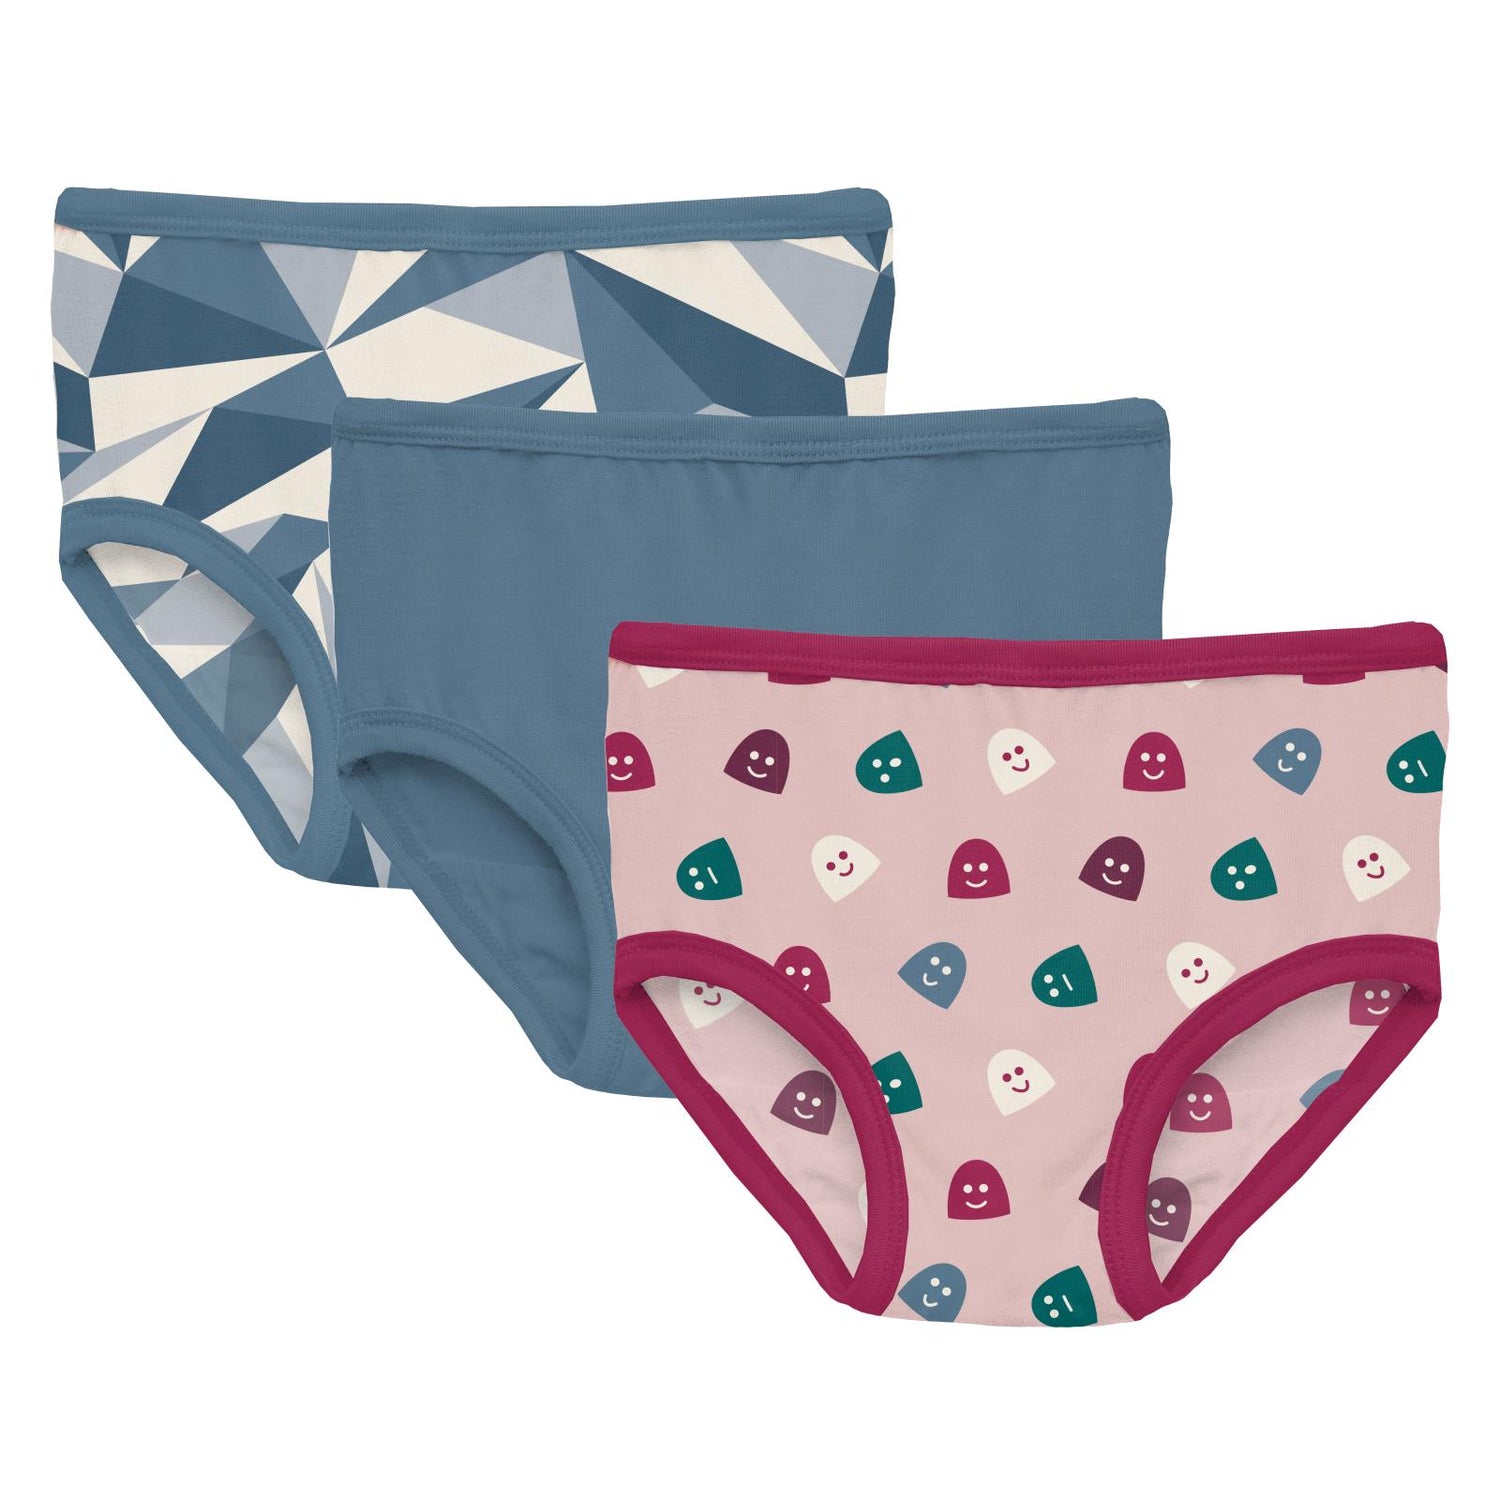 Print Girl's Underwear Set of 3 in Winter Ice, Parisian Blue & Baby Rose Happy Gumdrops